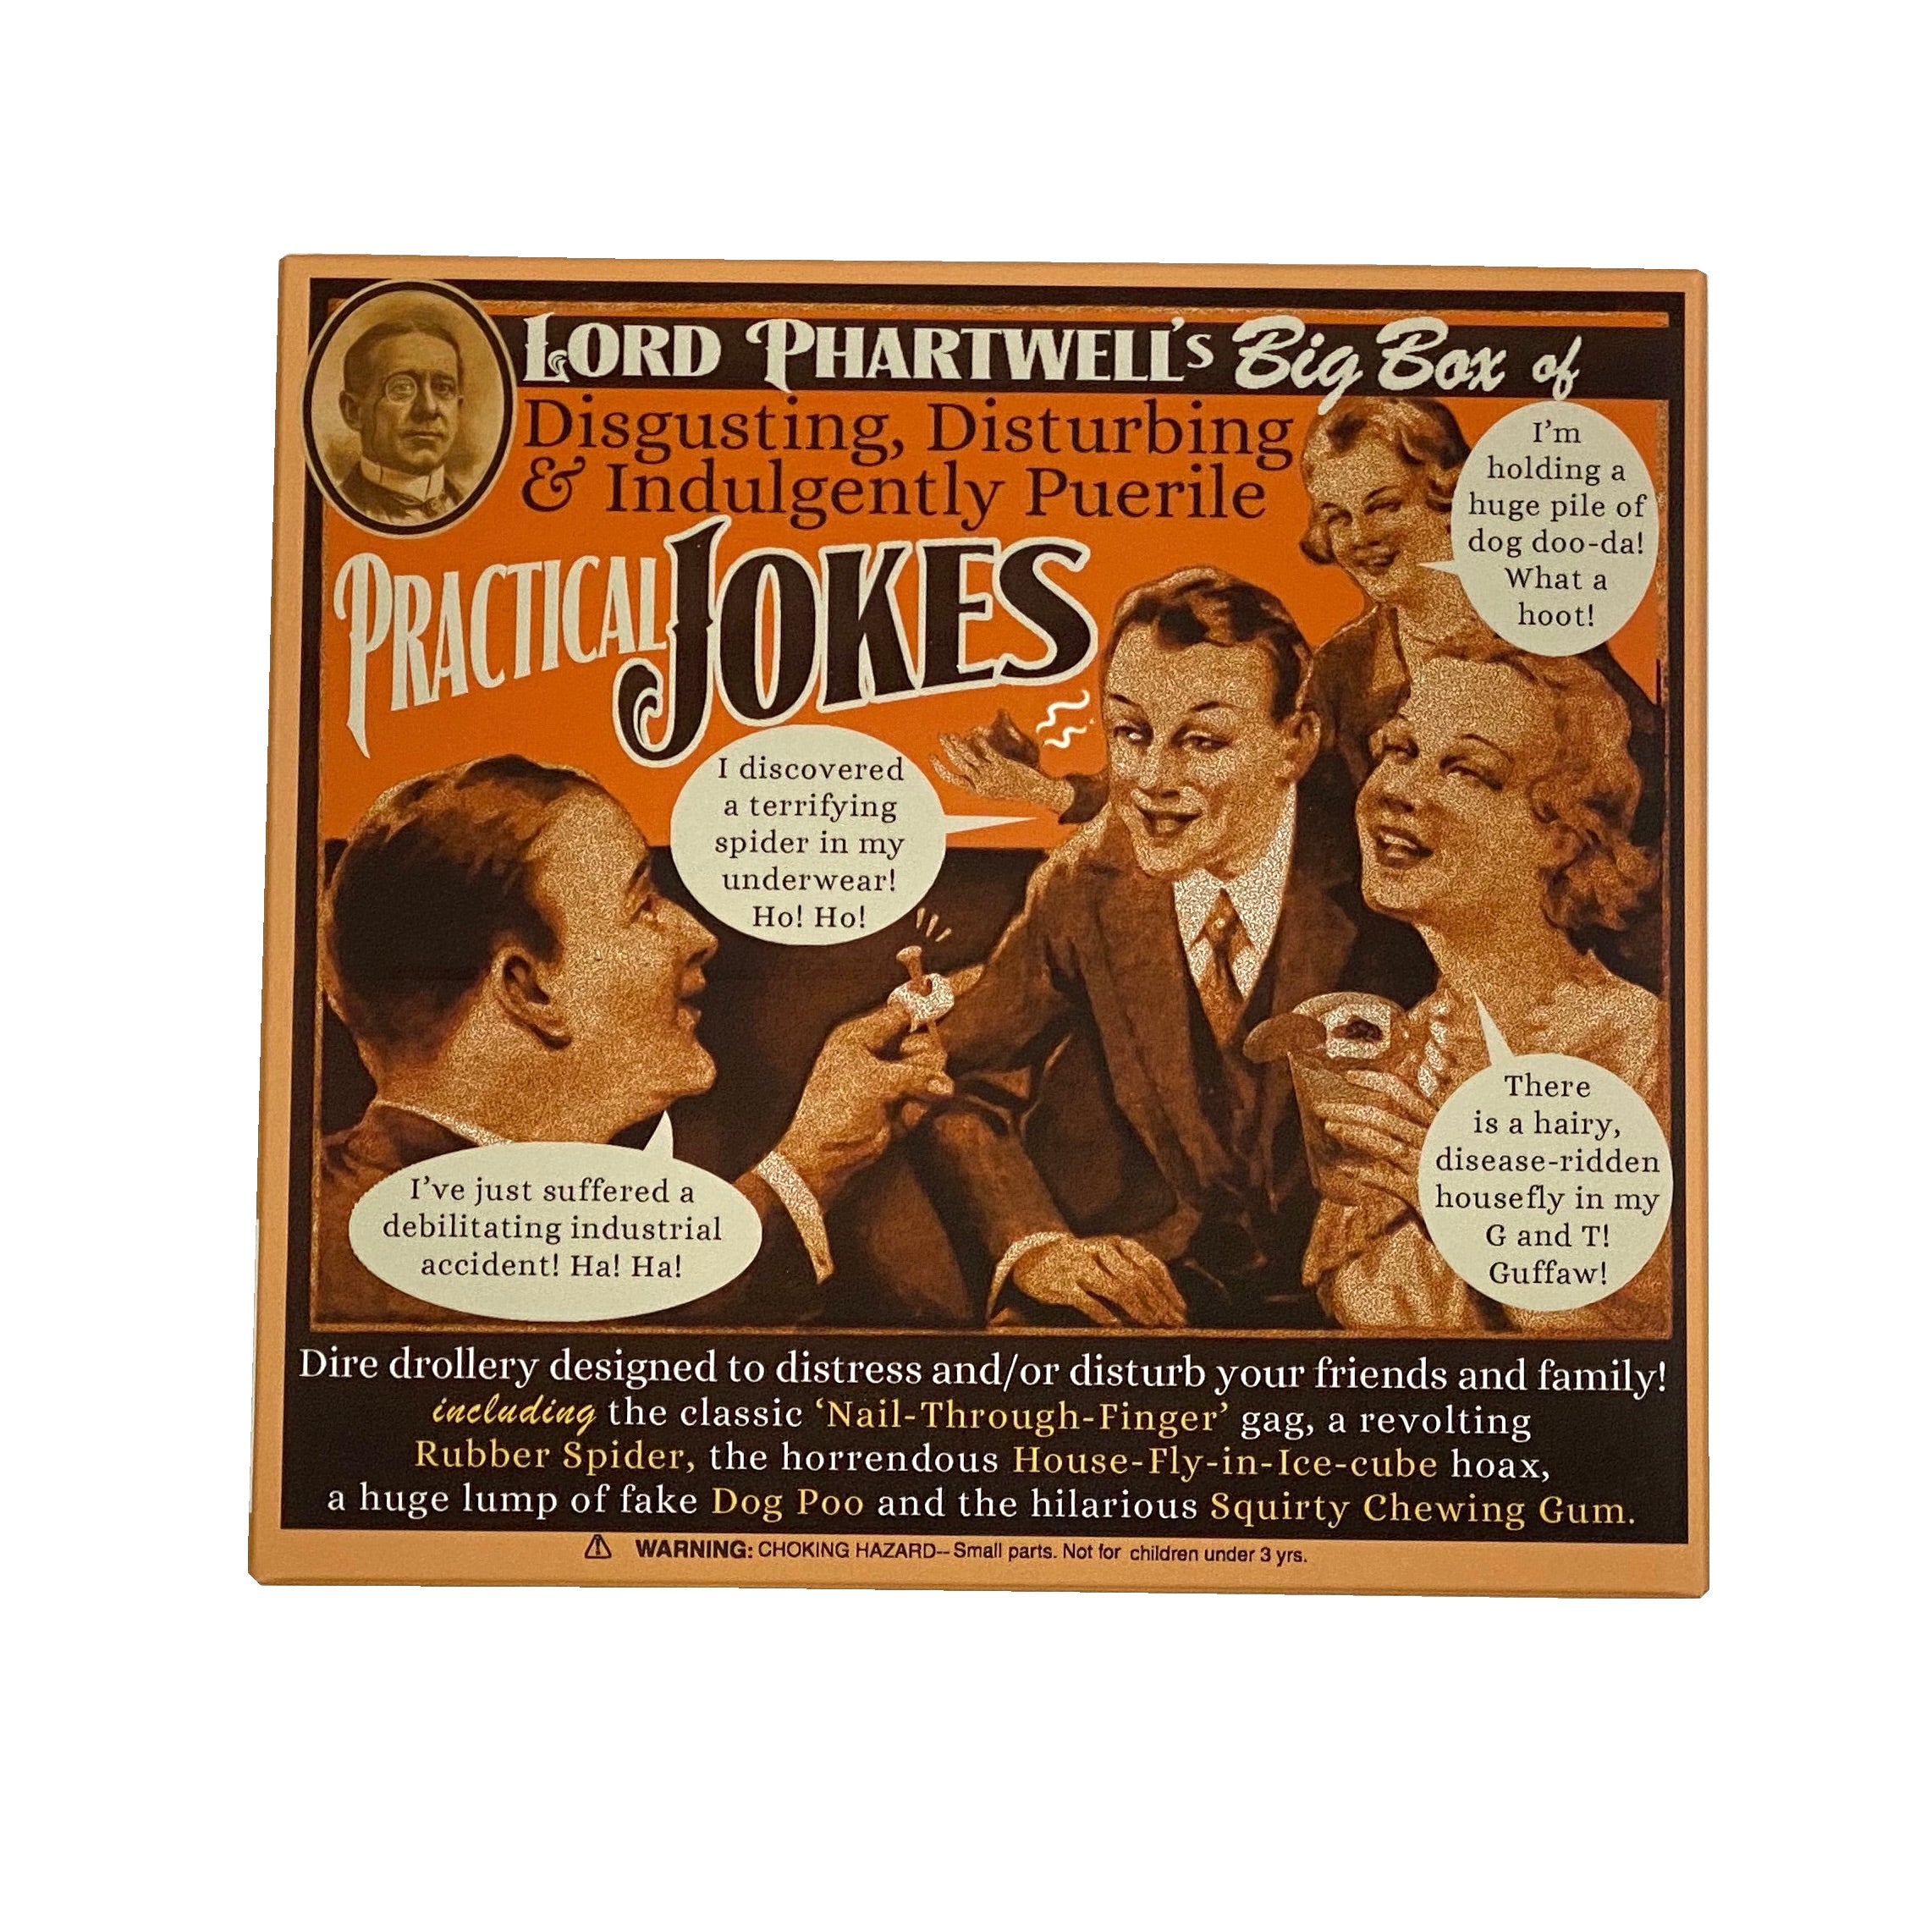 Lord Phartwell's Big Box of Practical Jokes    